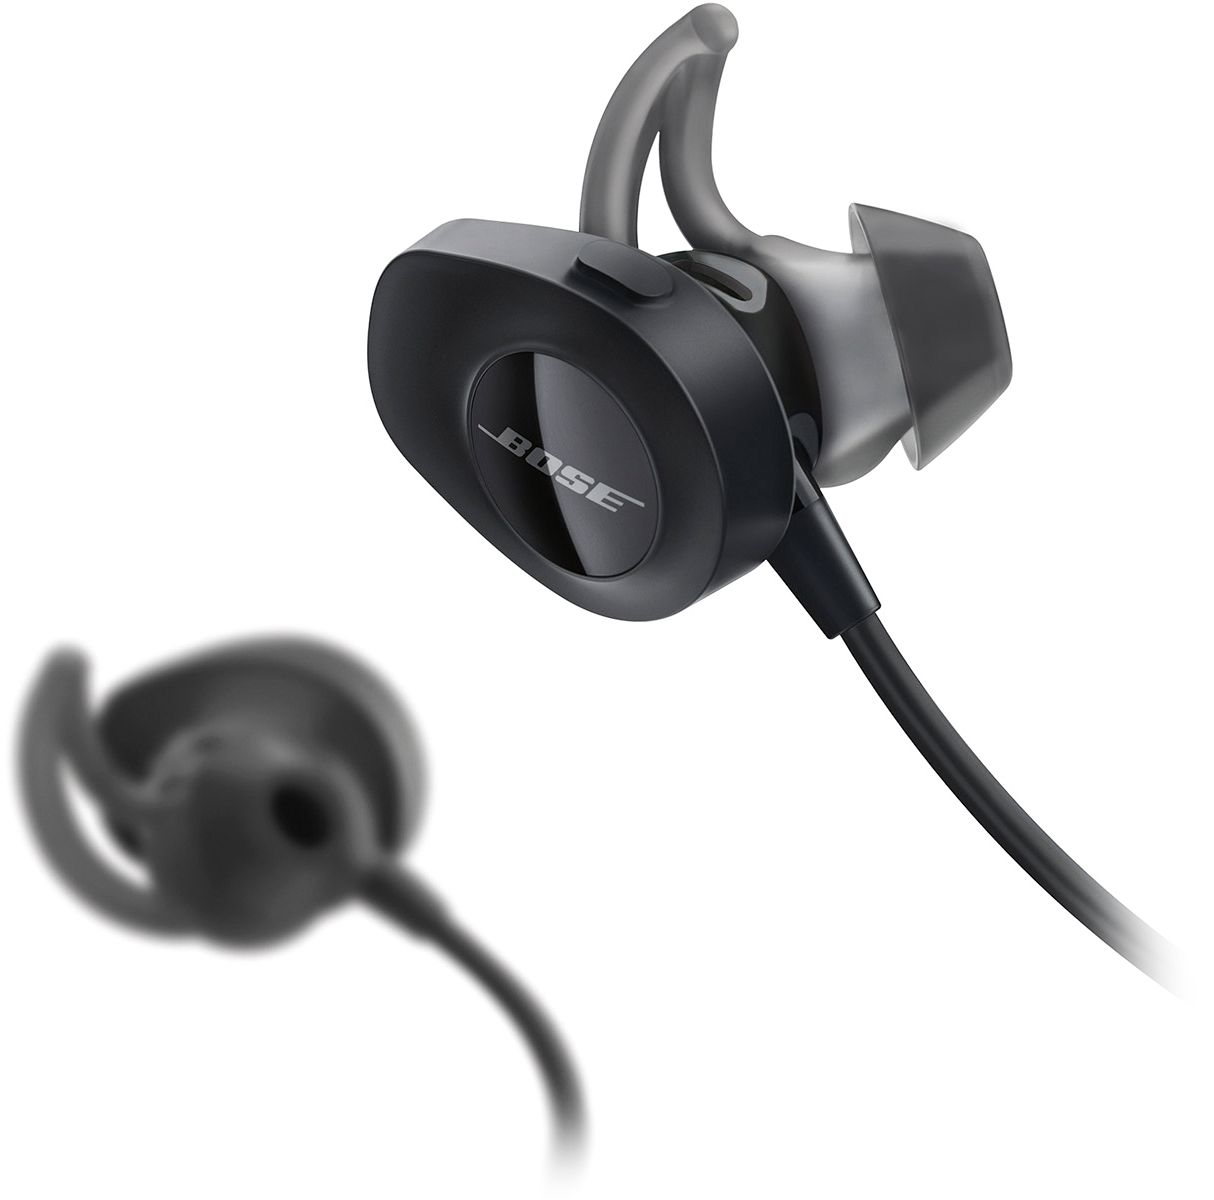 Bose SoundSport® Pulse wireless headphones Power Red 762518-0010 - Best Buy